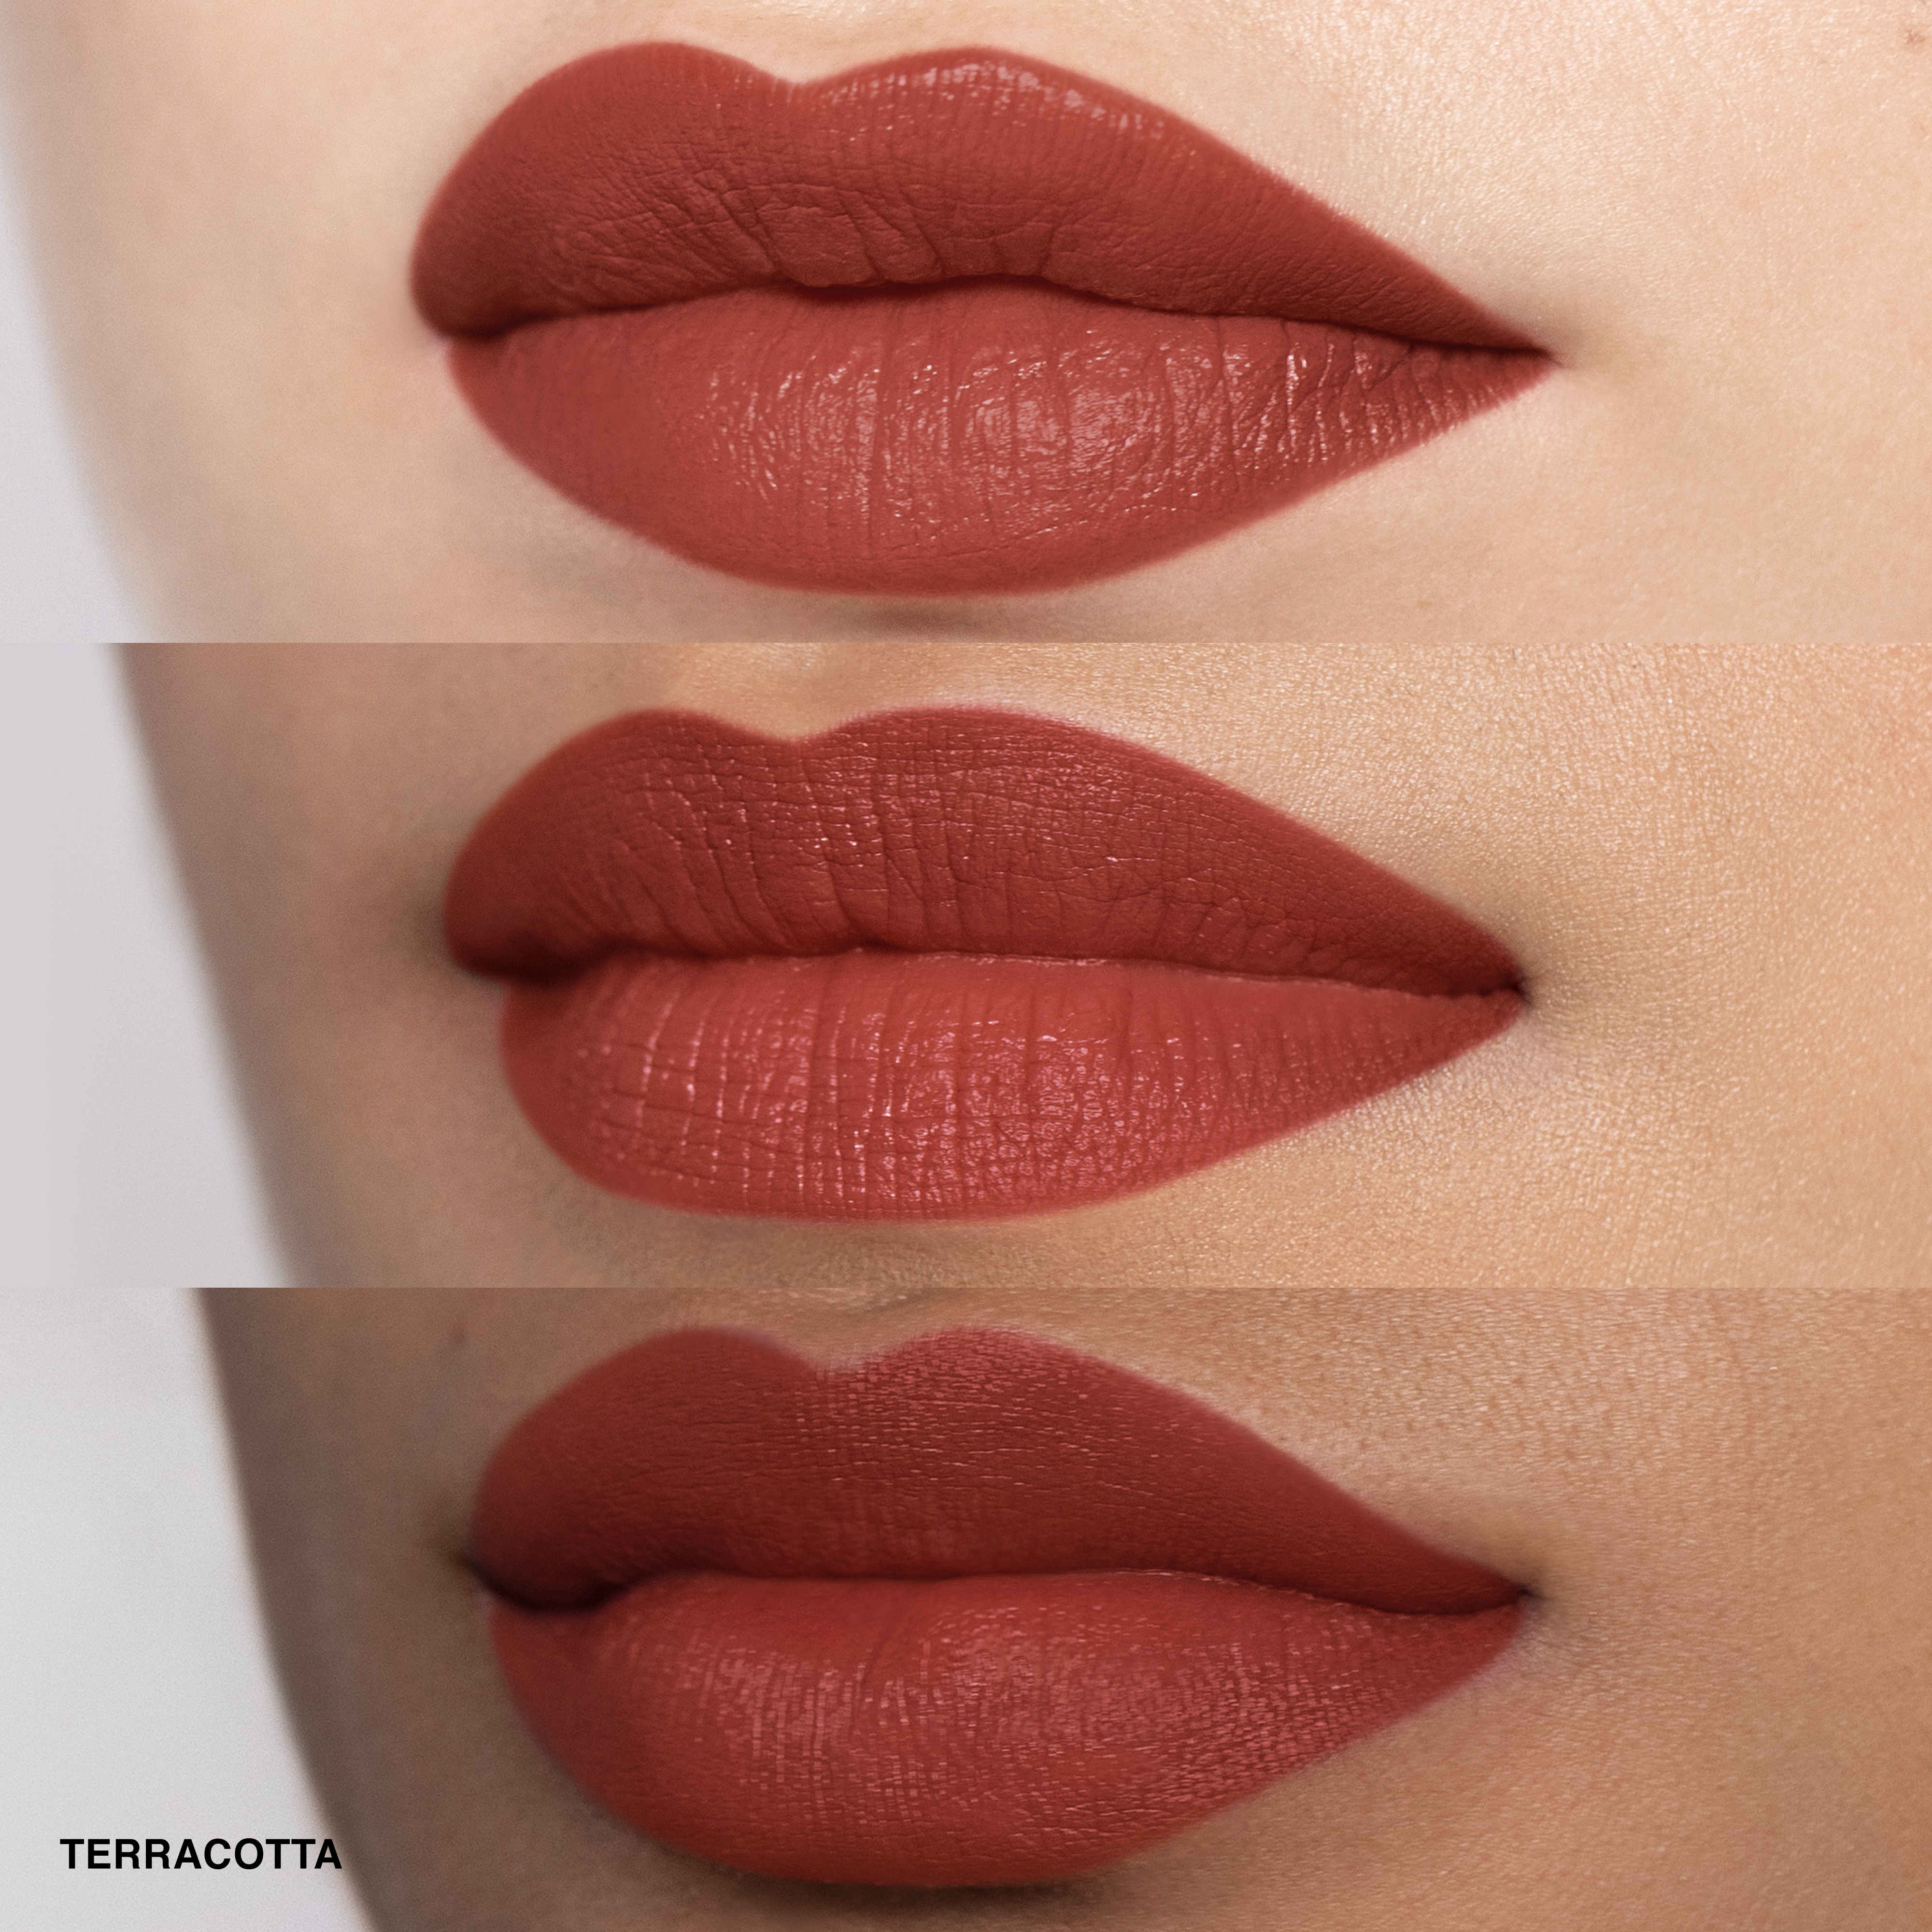  Luxe Defining Lipstick, Terracotta